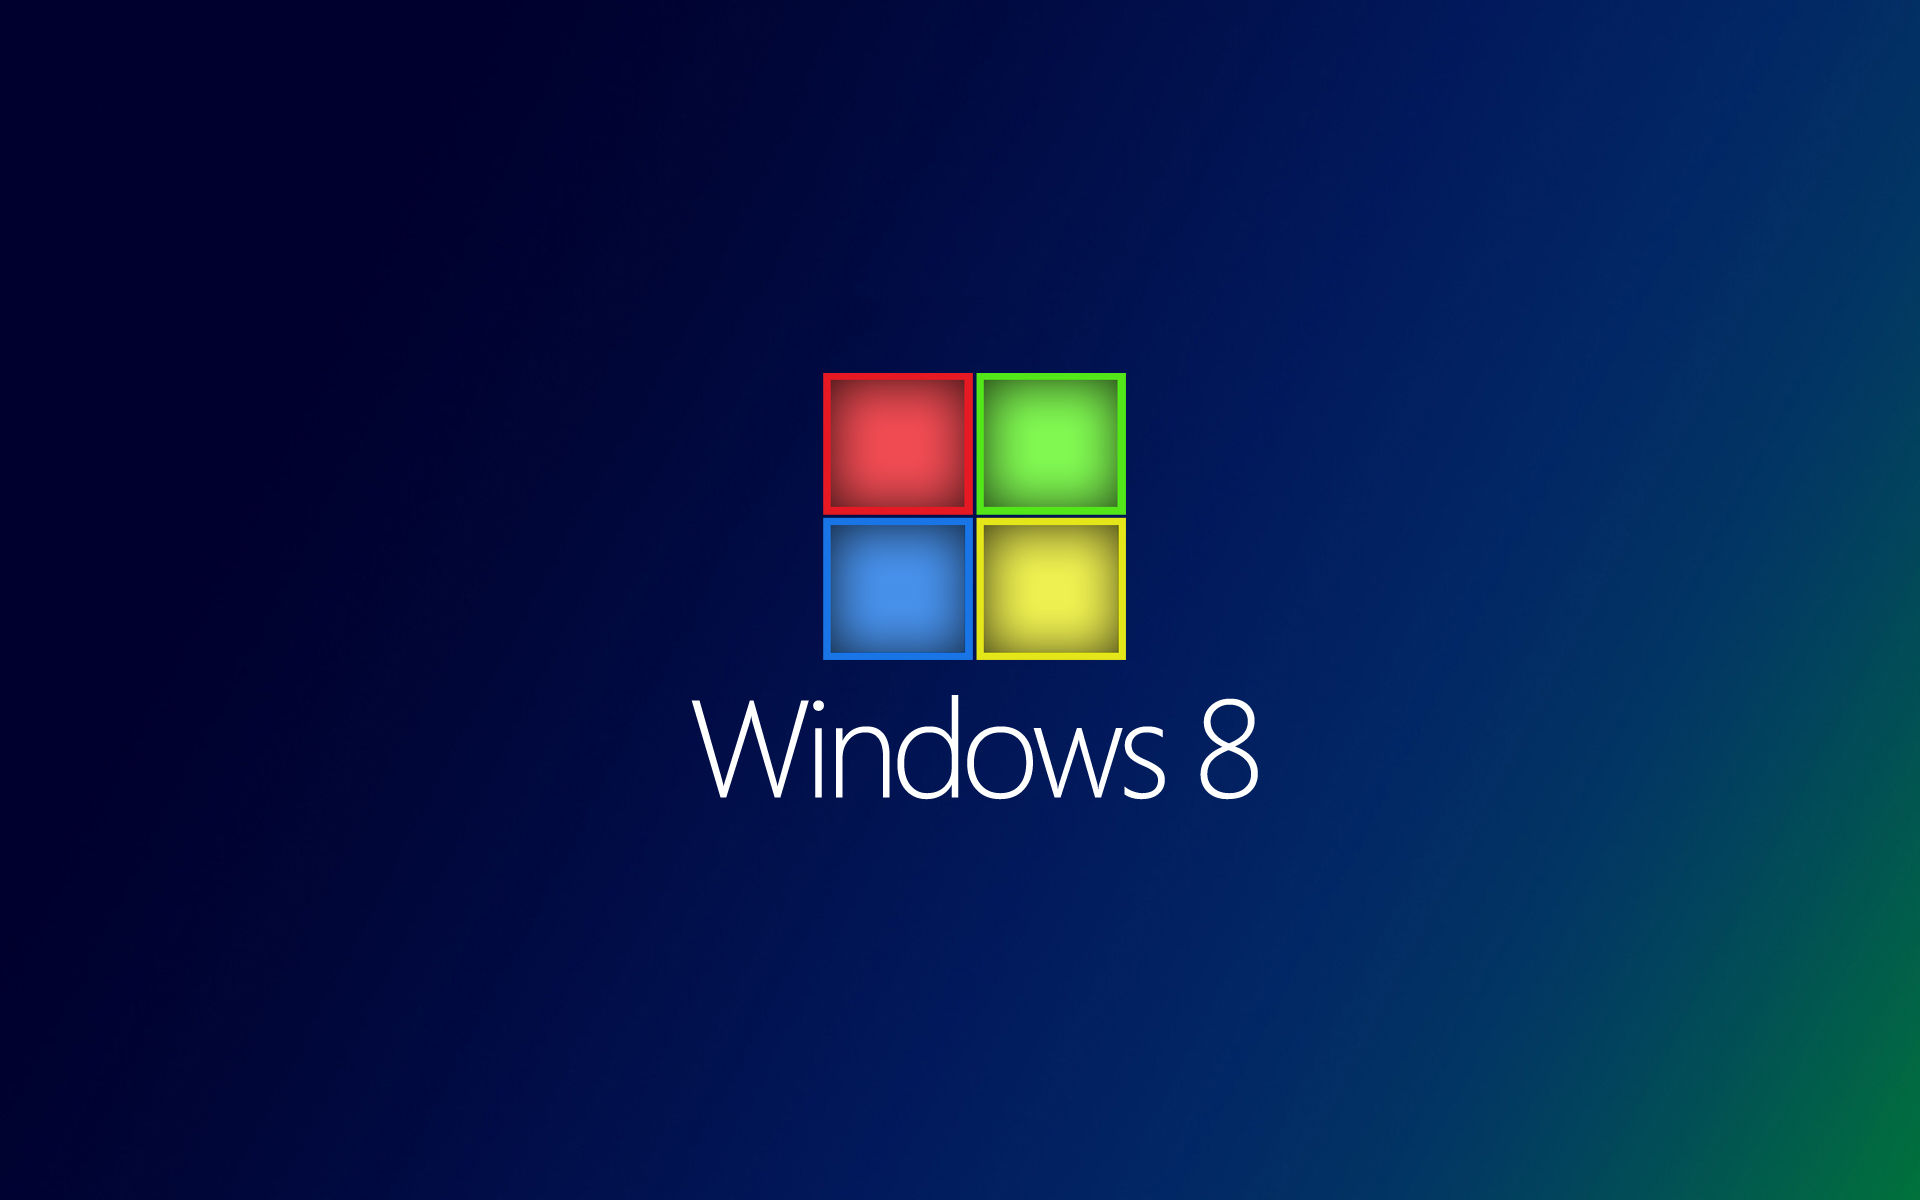 Download wallpaper for 1366x768 resolution | Windows 8, Logo, Blue  Background | brands and logos | Wallpaper Better